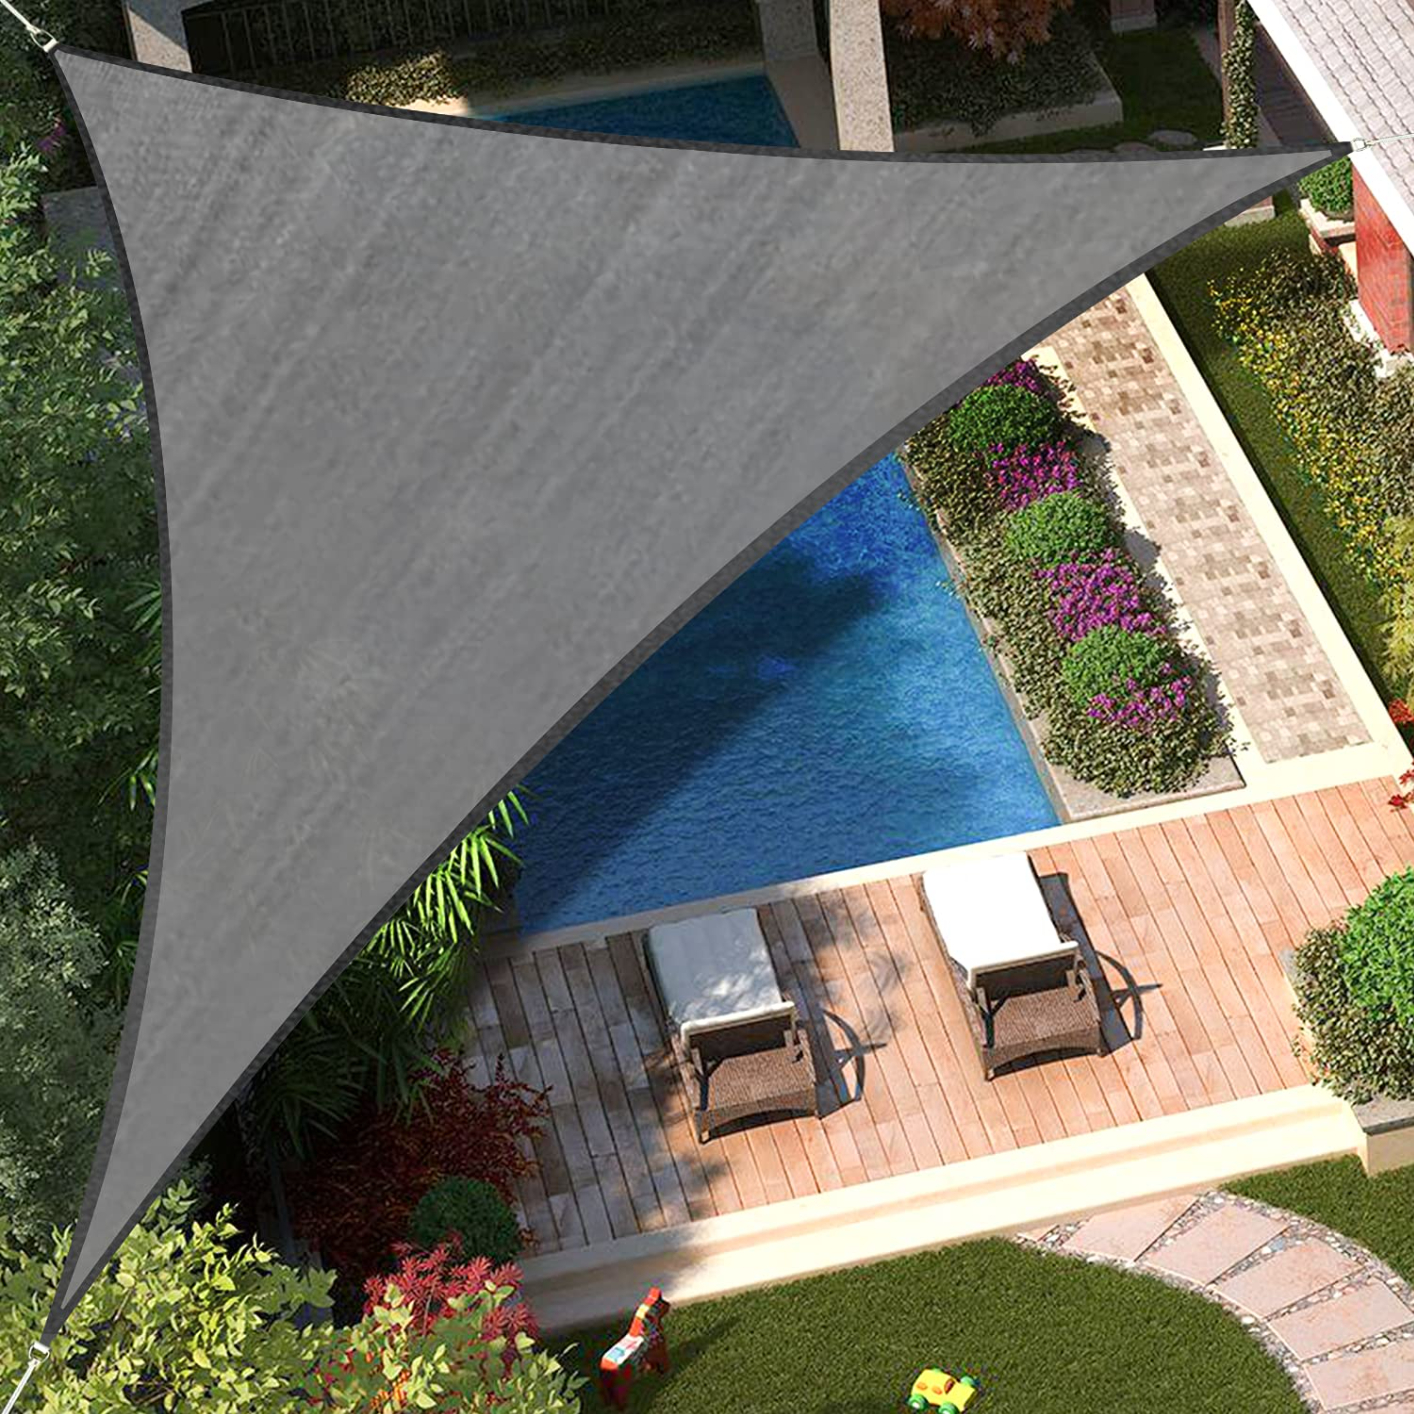 Sun Shade Sail Rectangle Canopy, UV Block Sunshade Awning for Outdoor Backyard Garden Deck Lawn Patio Covers